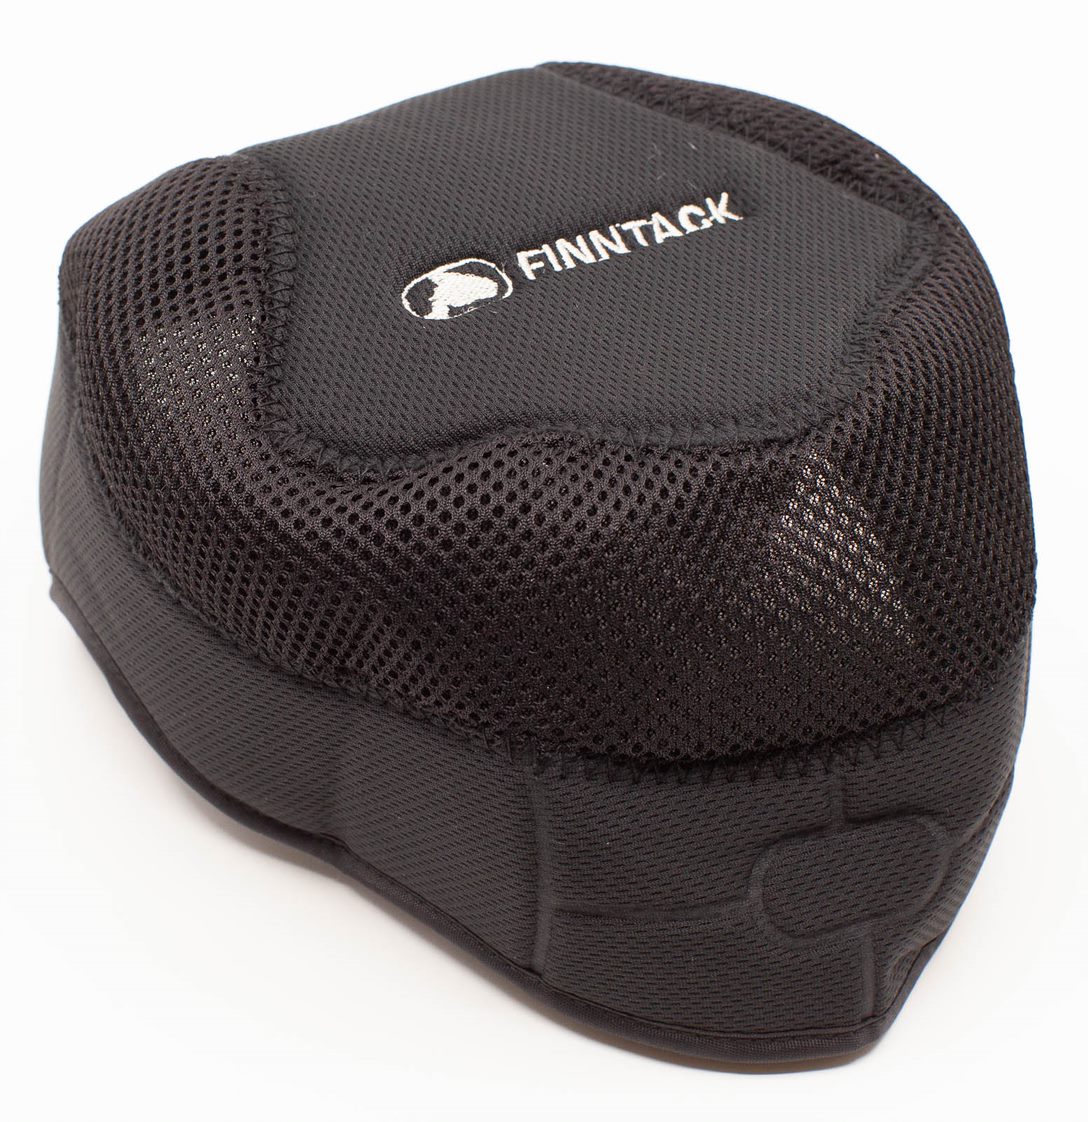 Finn-Tack herausnehmbare Polsterung für Trabsport-Helm (30216)